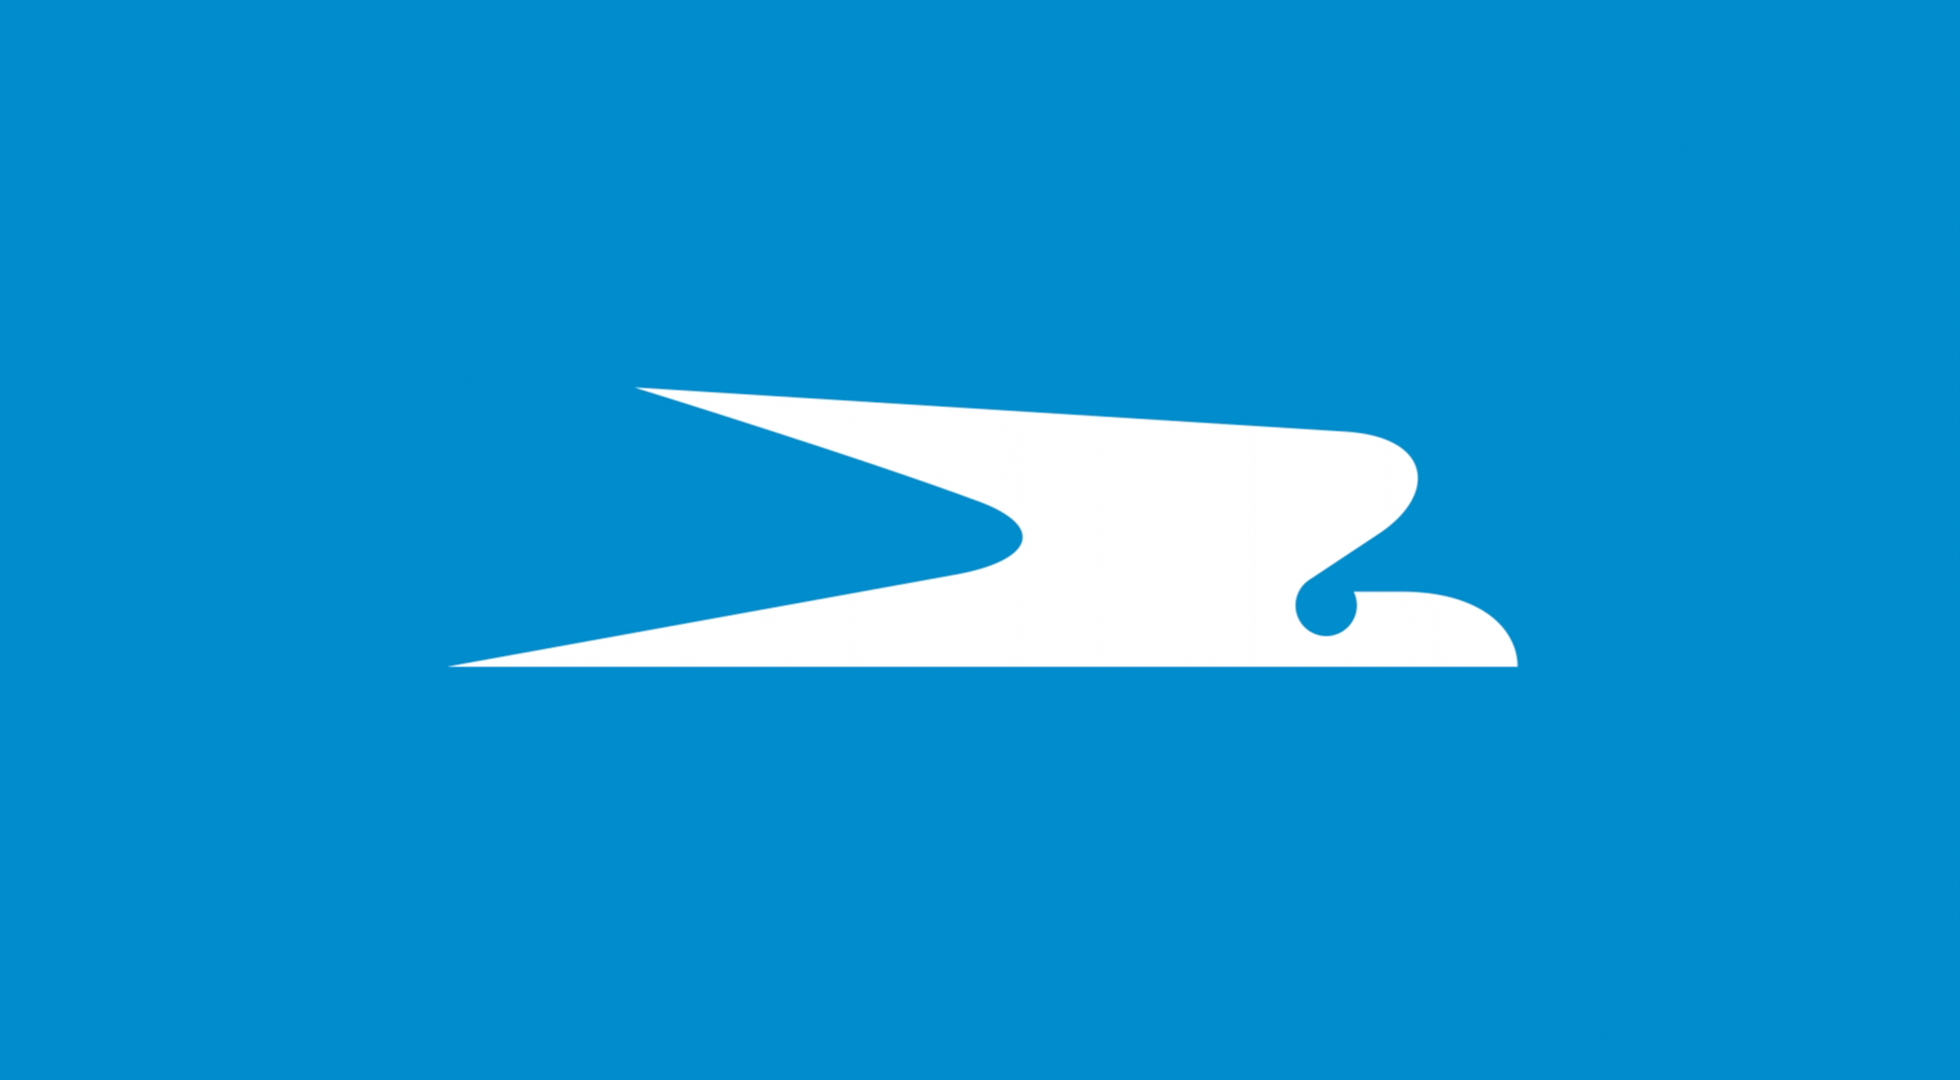 Aerolíneas Argentinas’s logo in white on blue background